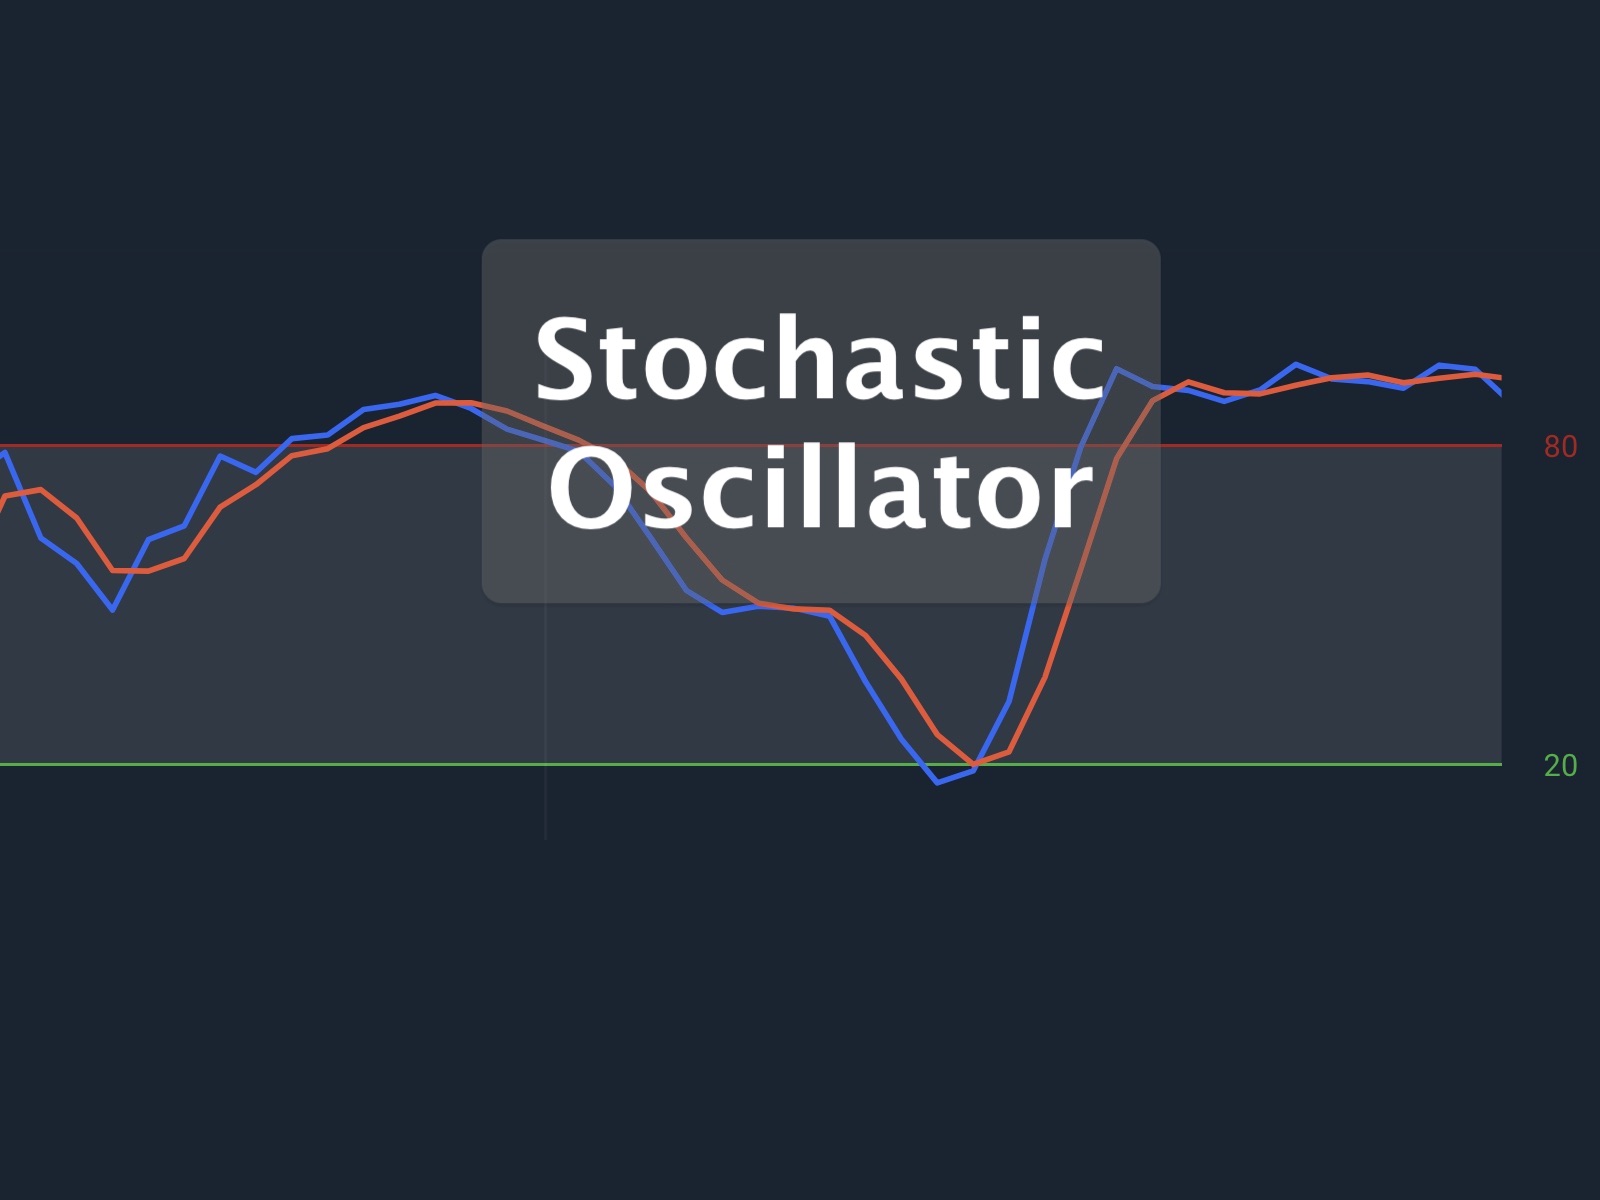 Using stochastic oscillator